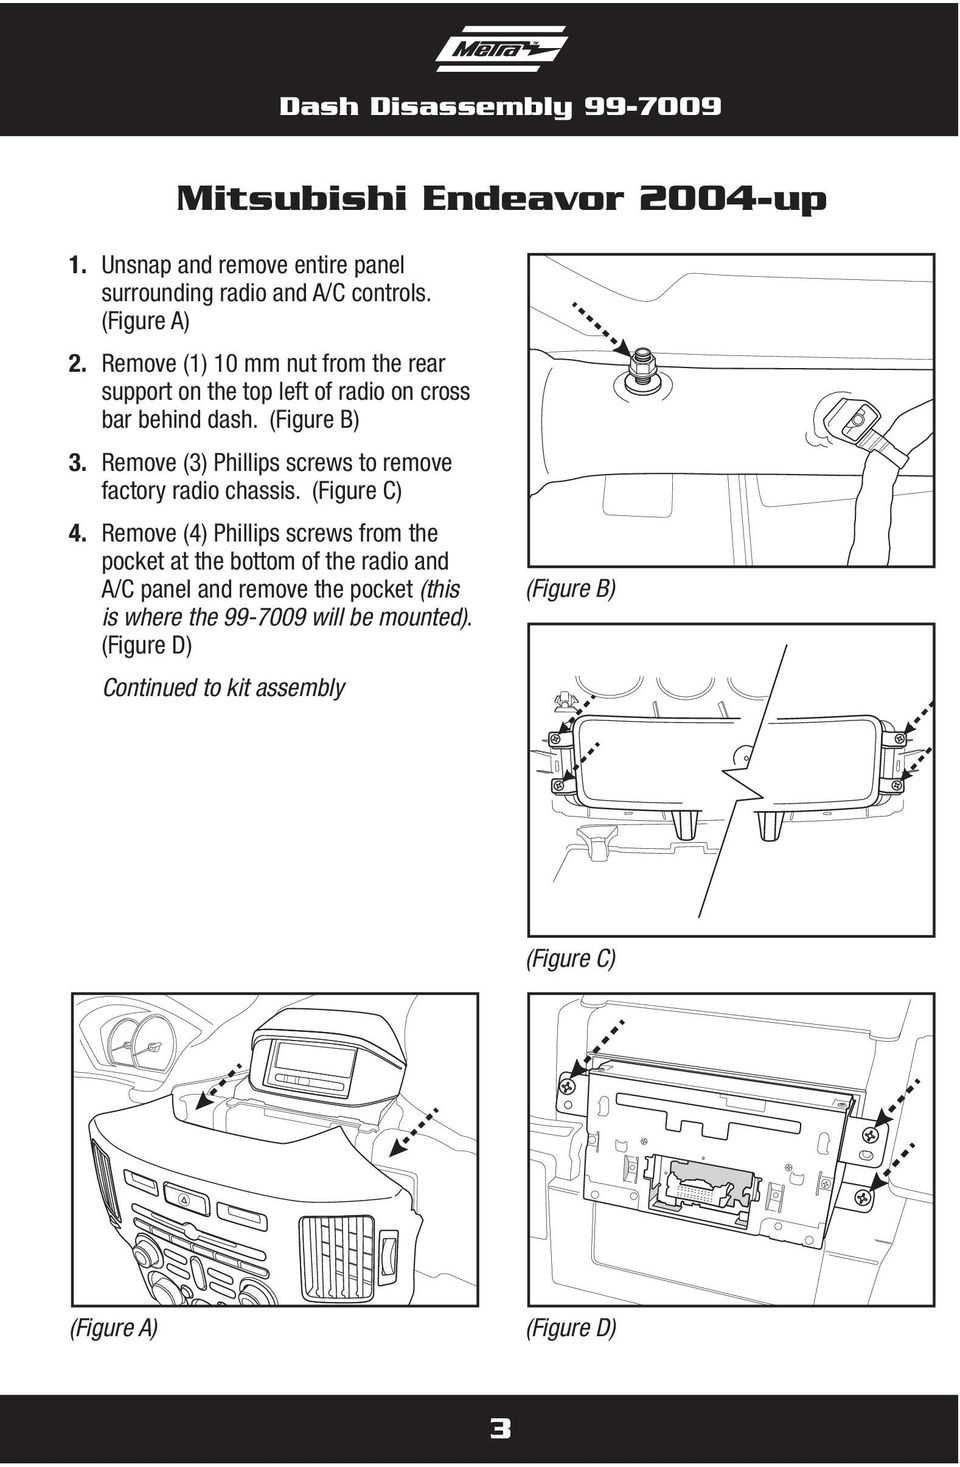 Remove (3) Phillips screws to remove factory radio chassis. (Figure C) 4.